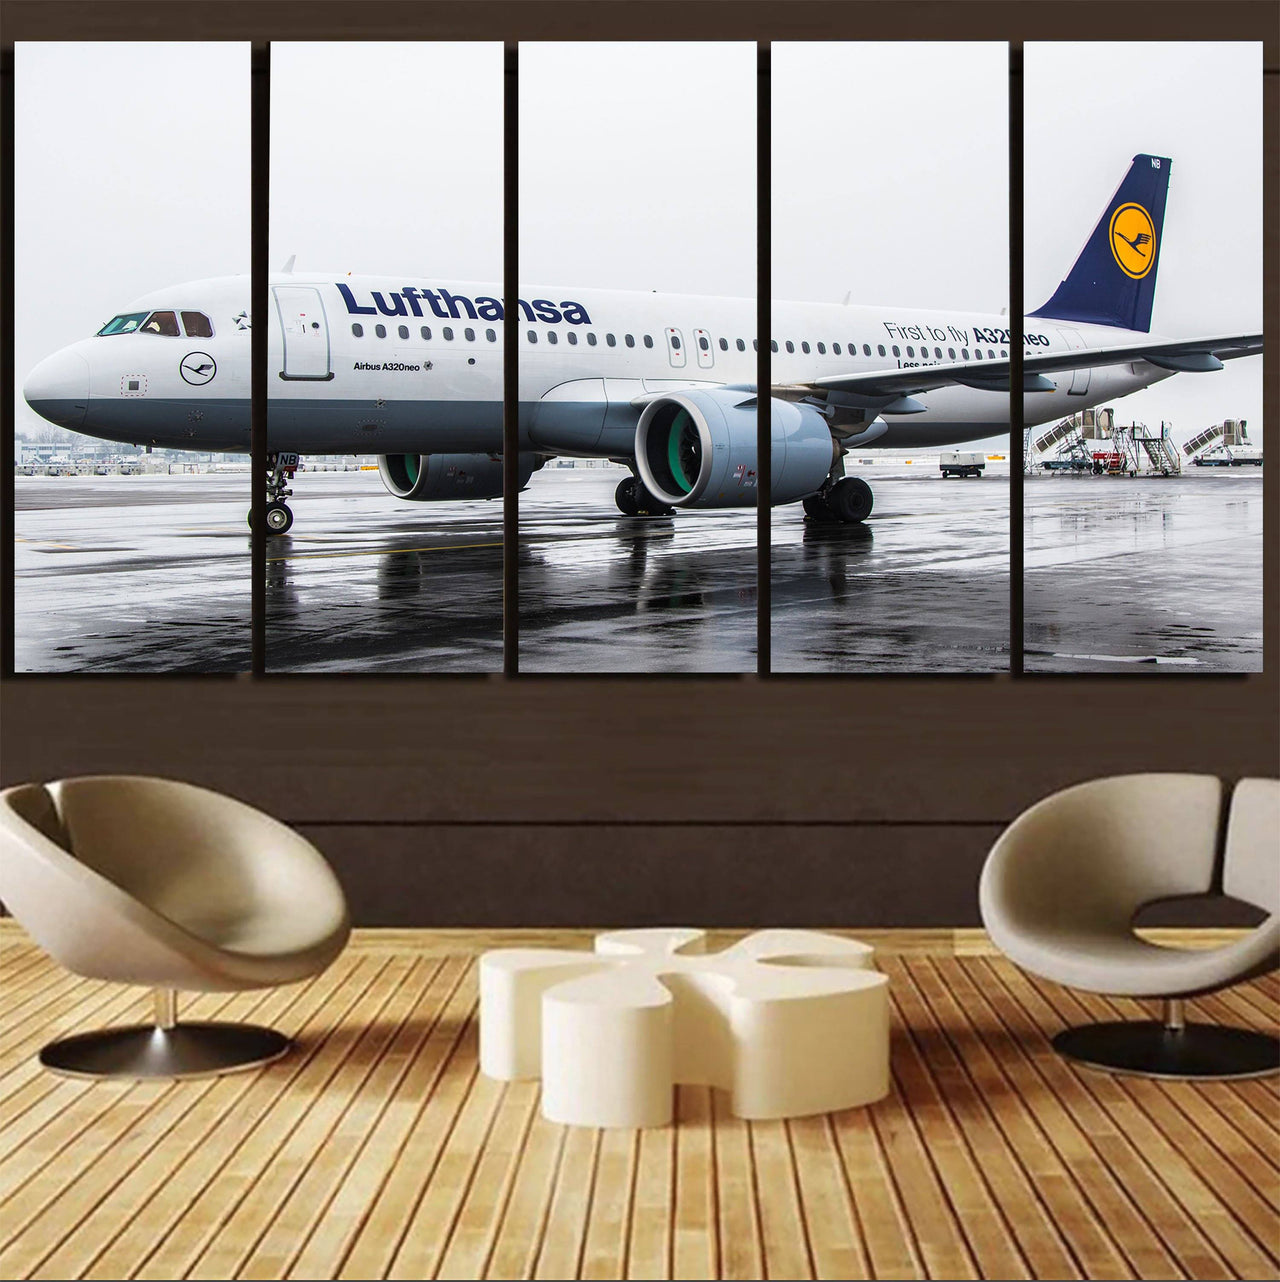 Lufthansa's A320 Neo Printed Canvas Prints (5 Pieces) Aviation Shop 